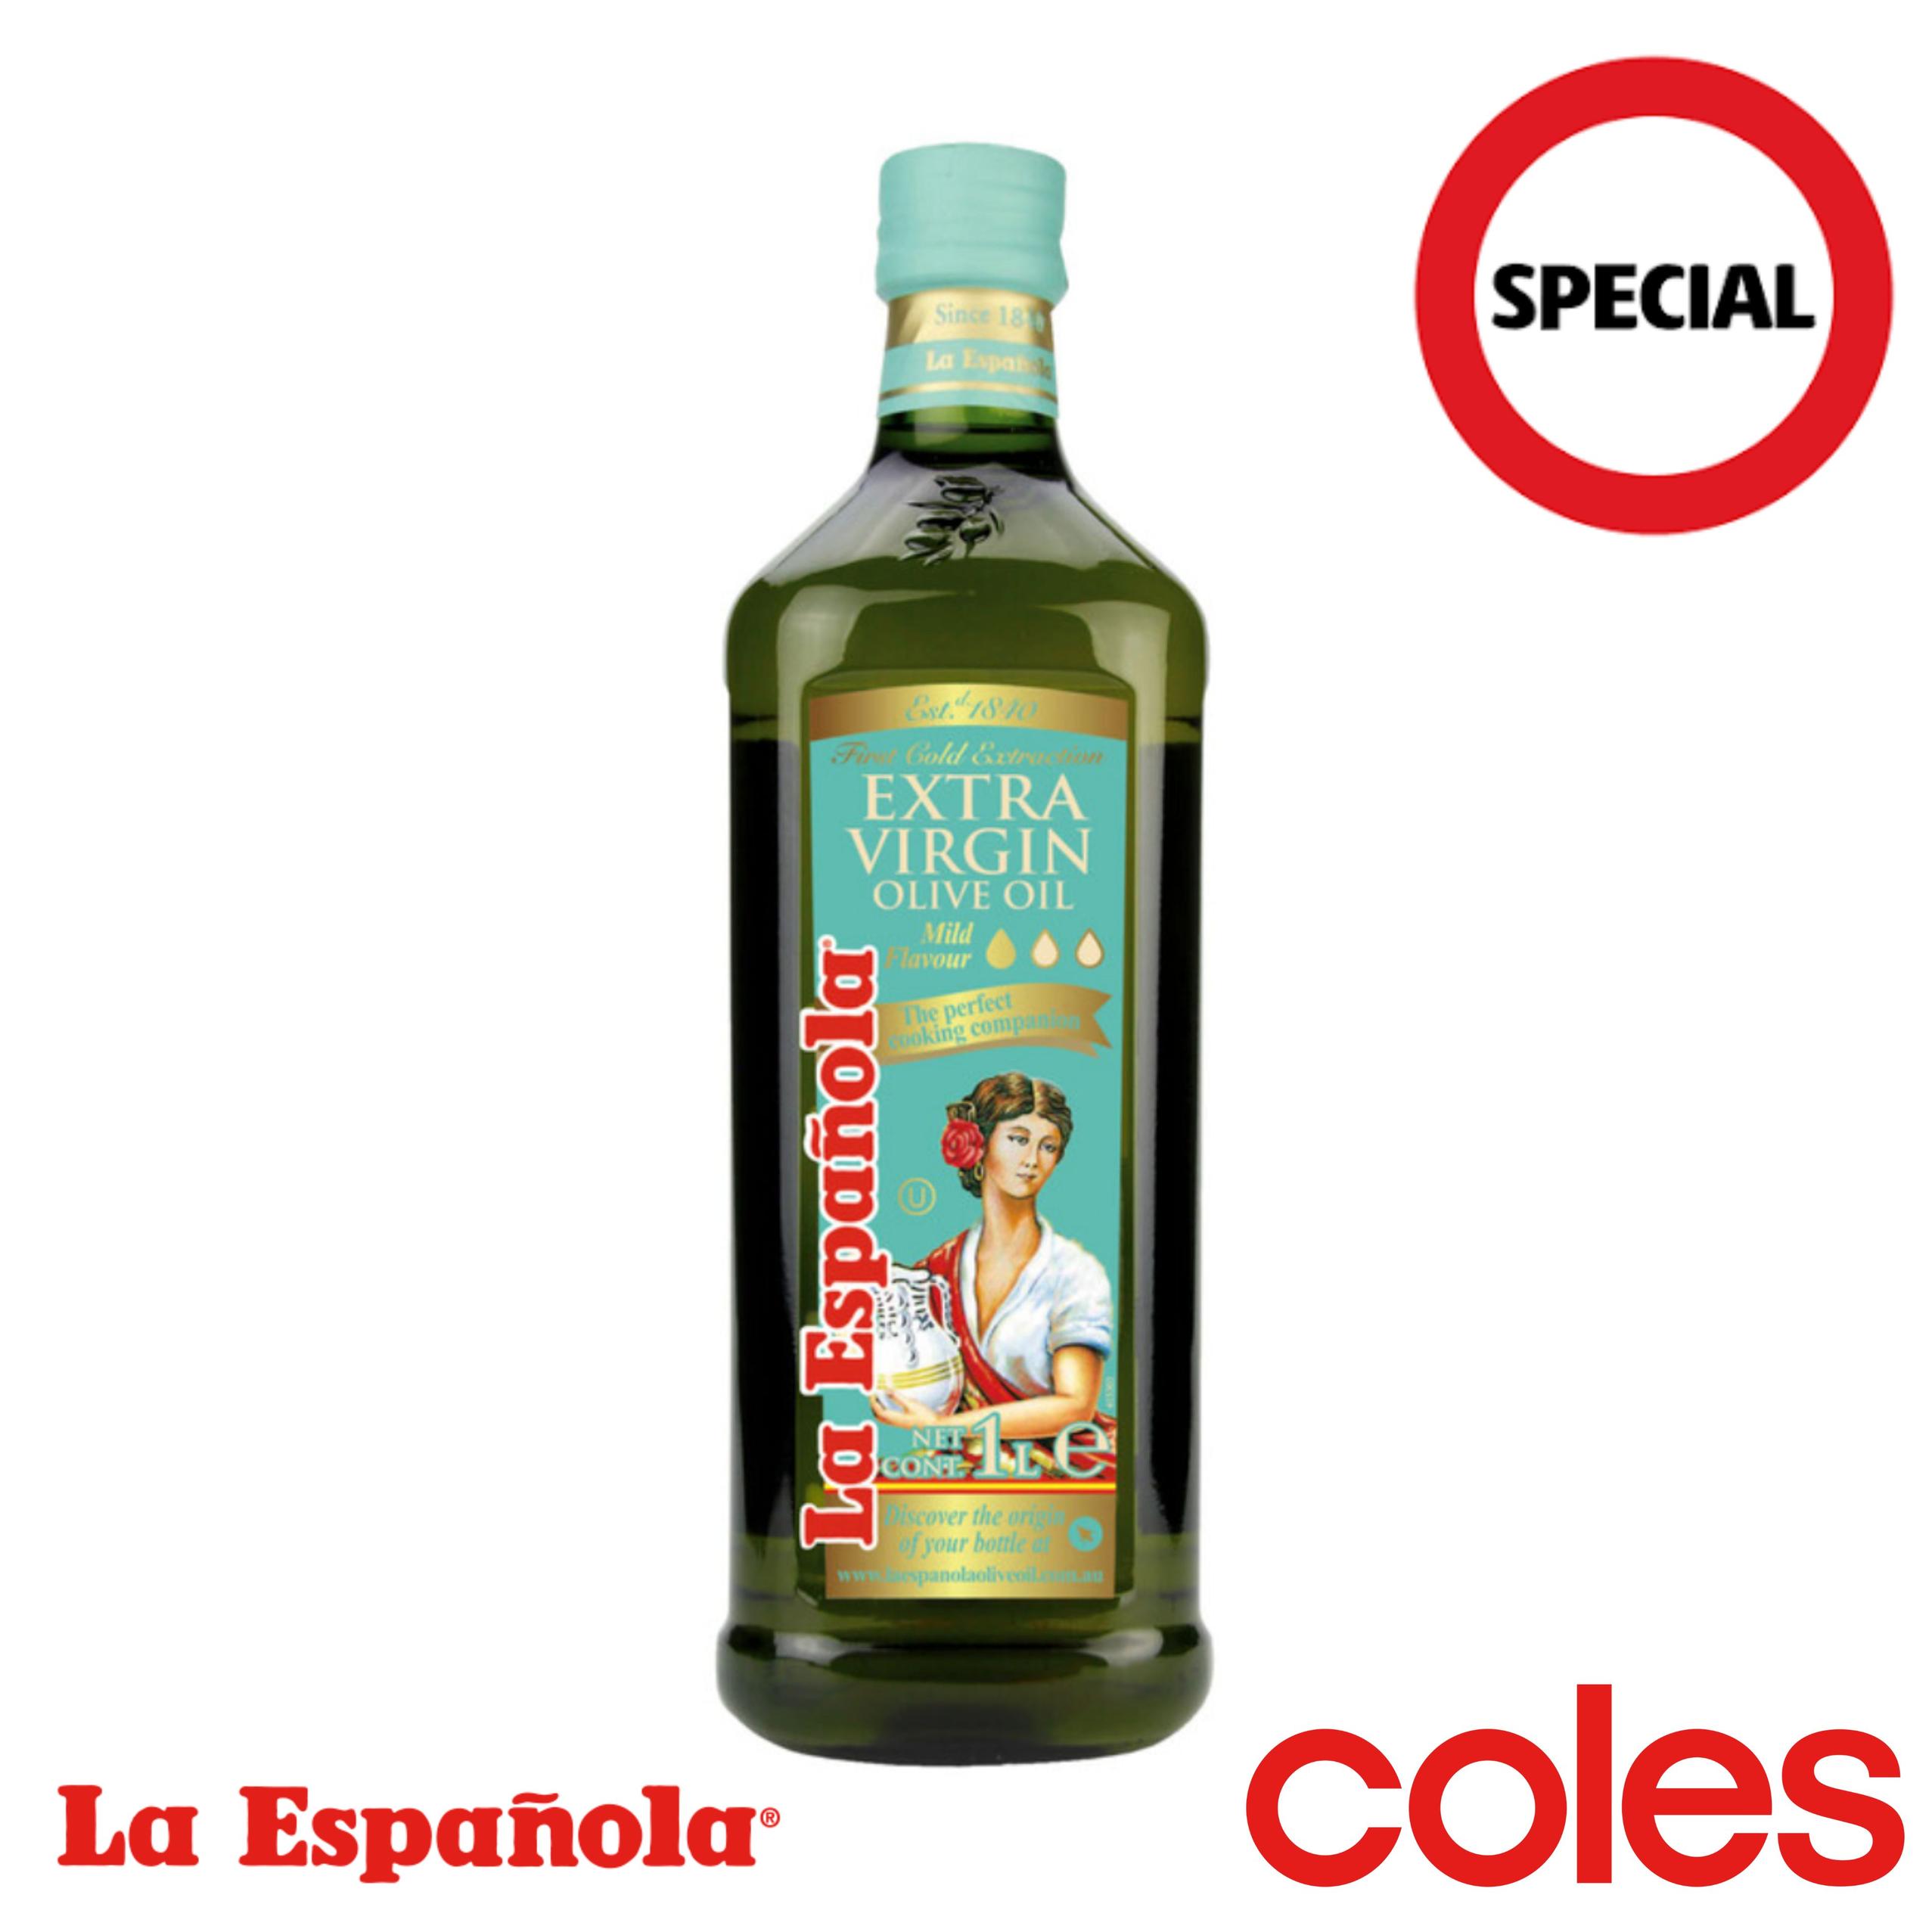 La Espanola Extra Virgin Olive Oil Mild Flavour | 1L offers at $18 in Coles